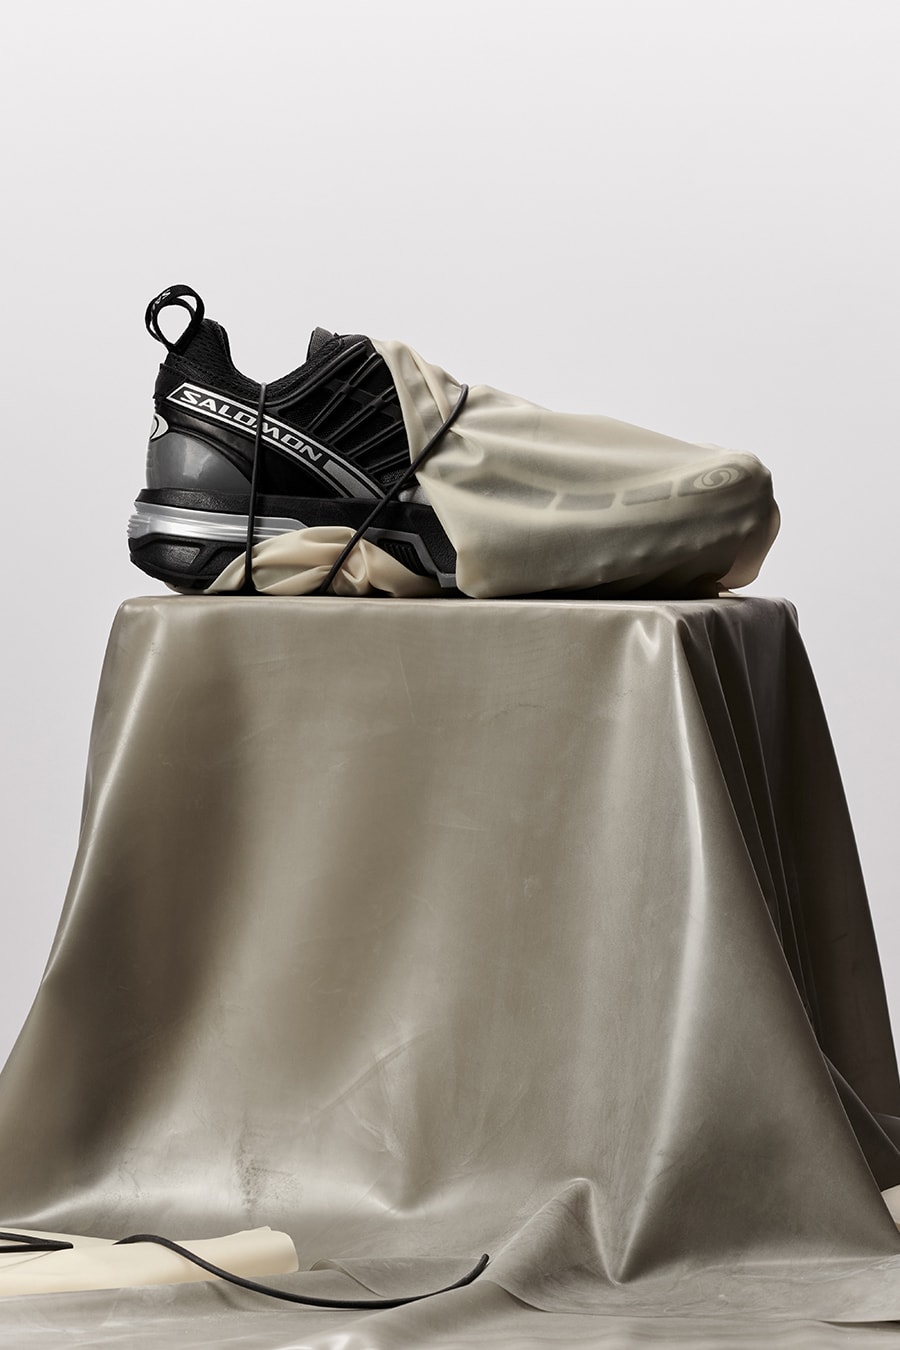 Dover Street Market Salomon ACS Pro Advanced Black Quiet Shade Metallic Silver Vanilla Ice Collaboration Sneakers Release Information